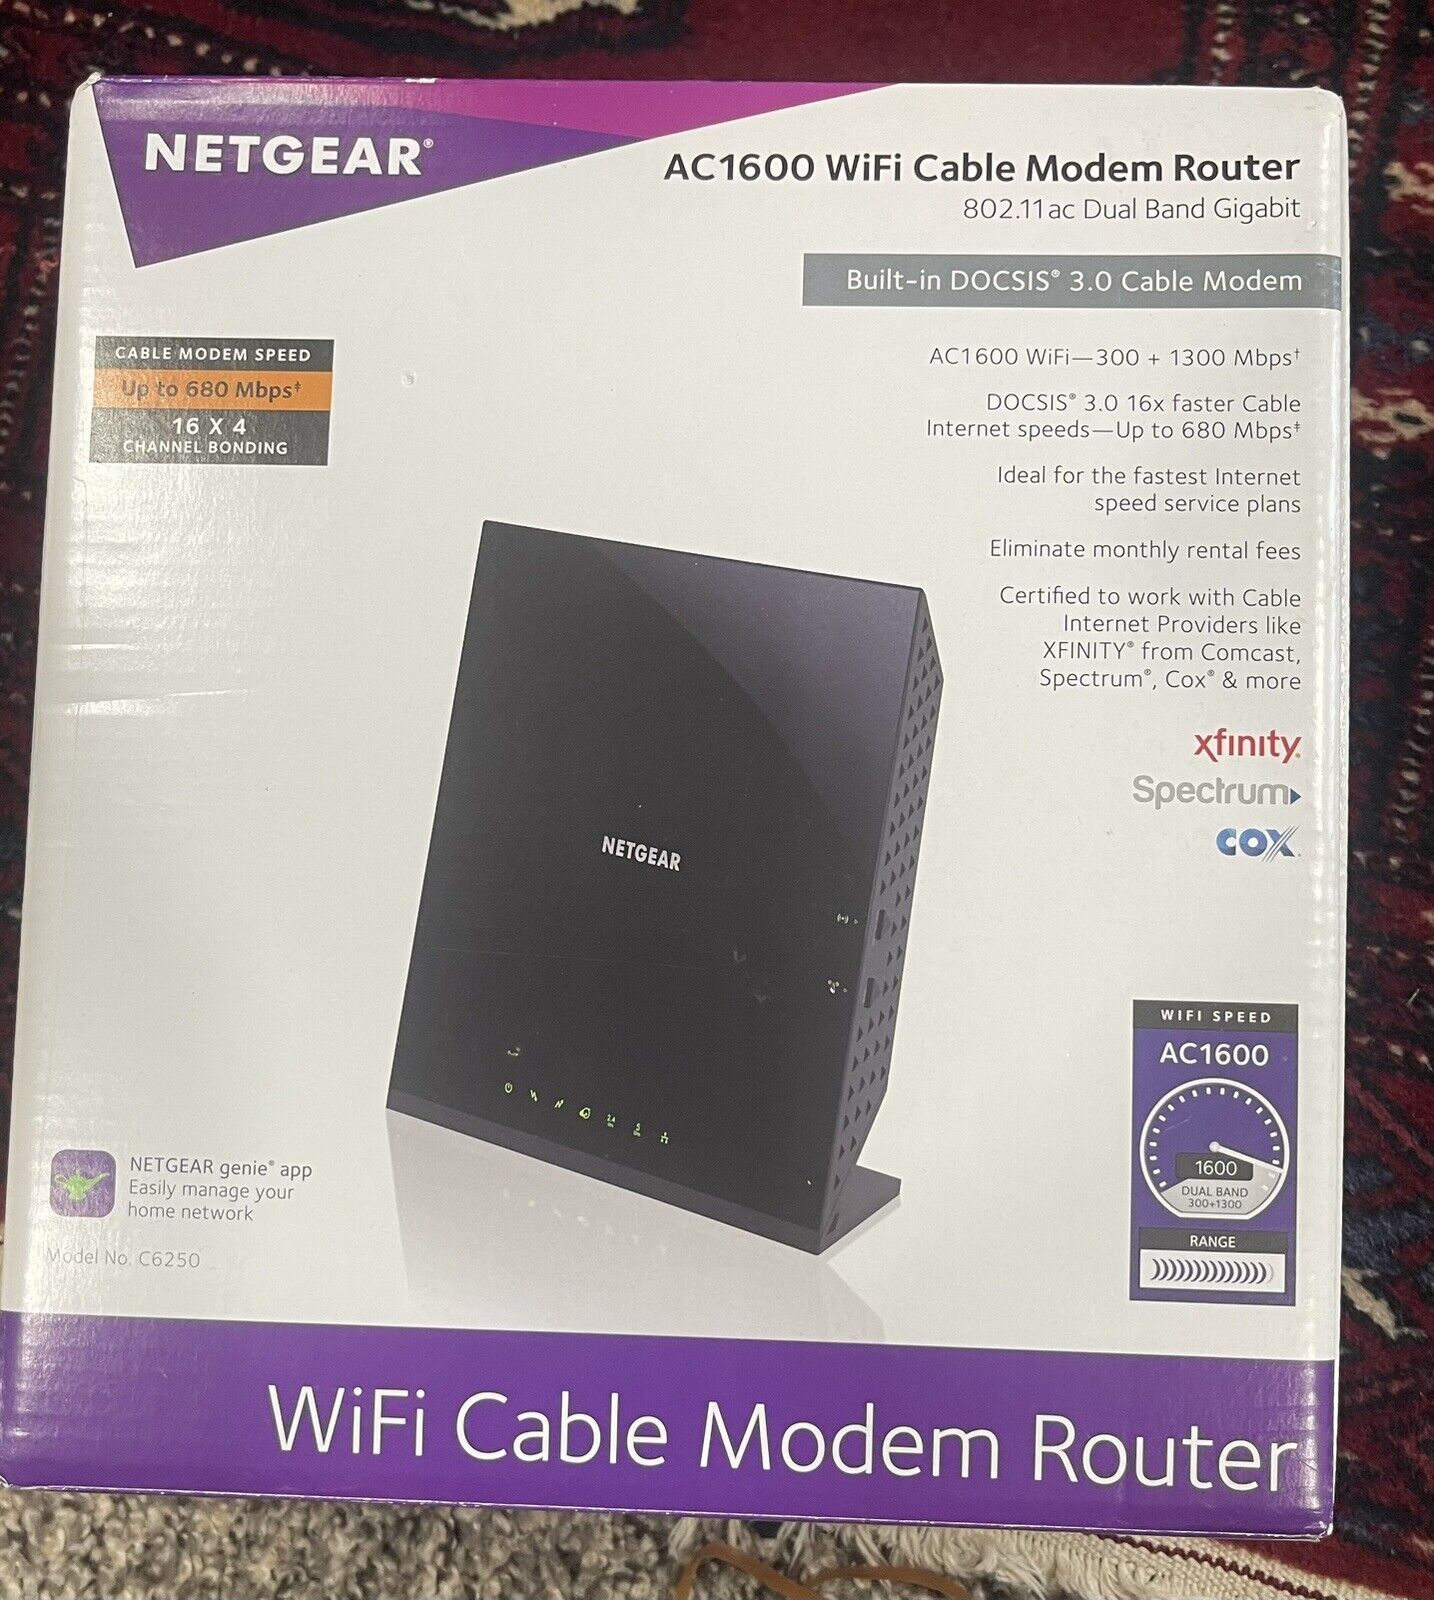 NETGEAR C6250-1AZNAS WiFi Cable AC1600 Modem Router.